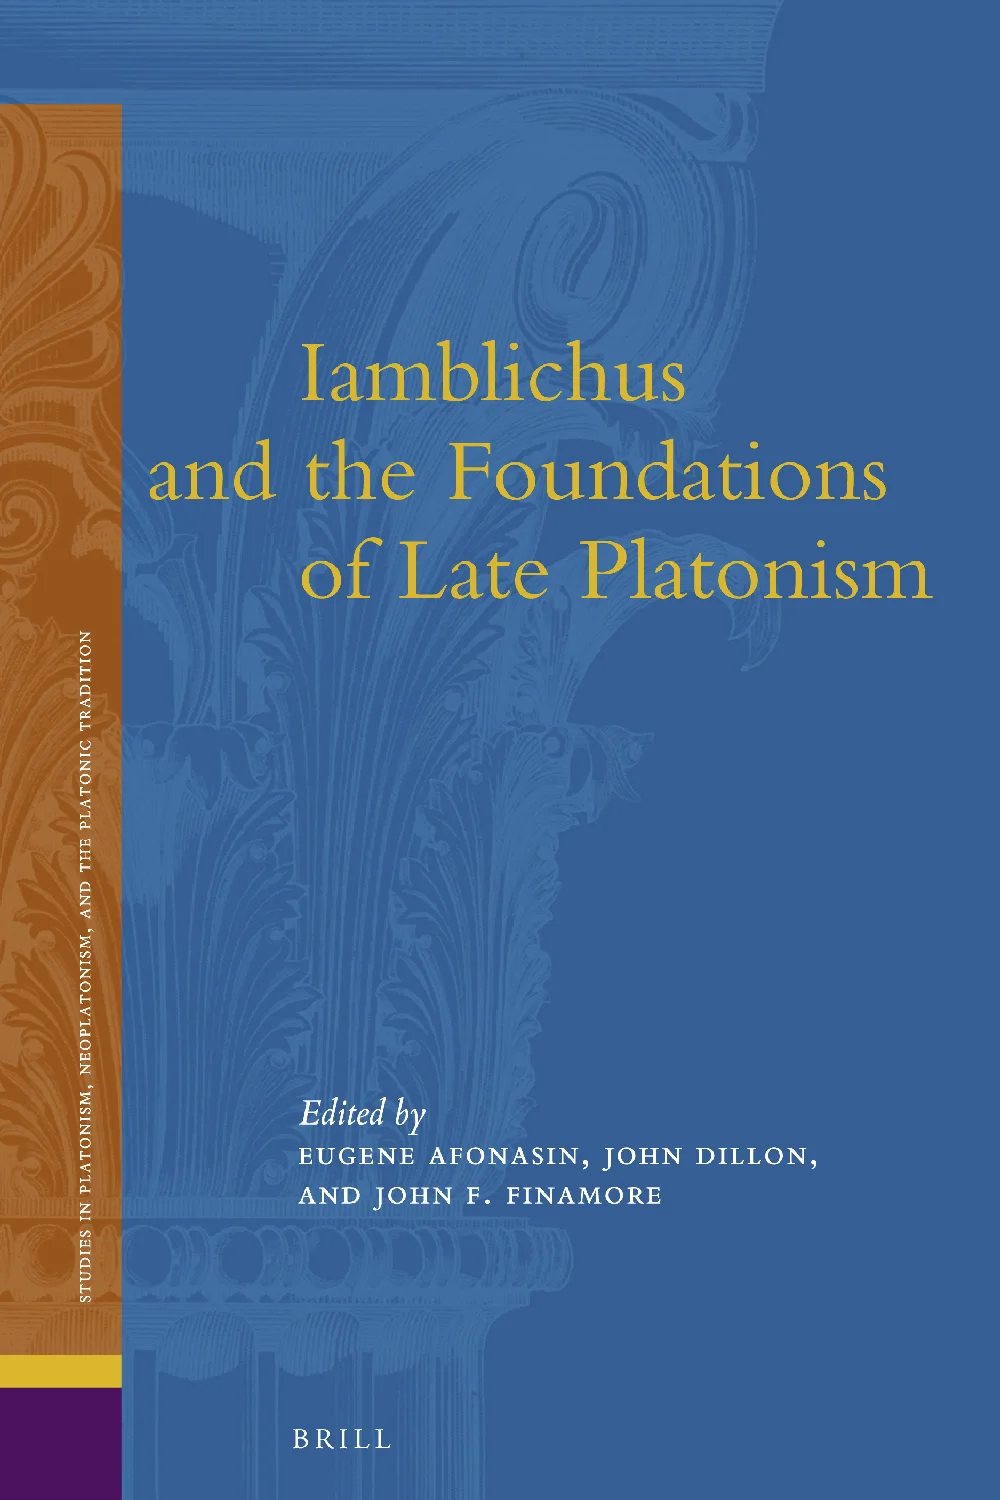 Iamblichus and the Foundations of Late Platonism